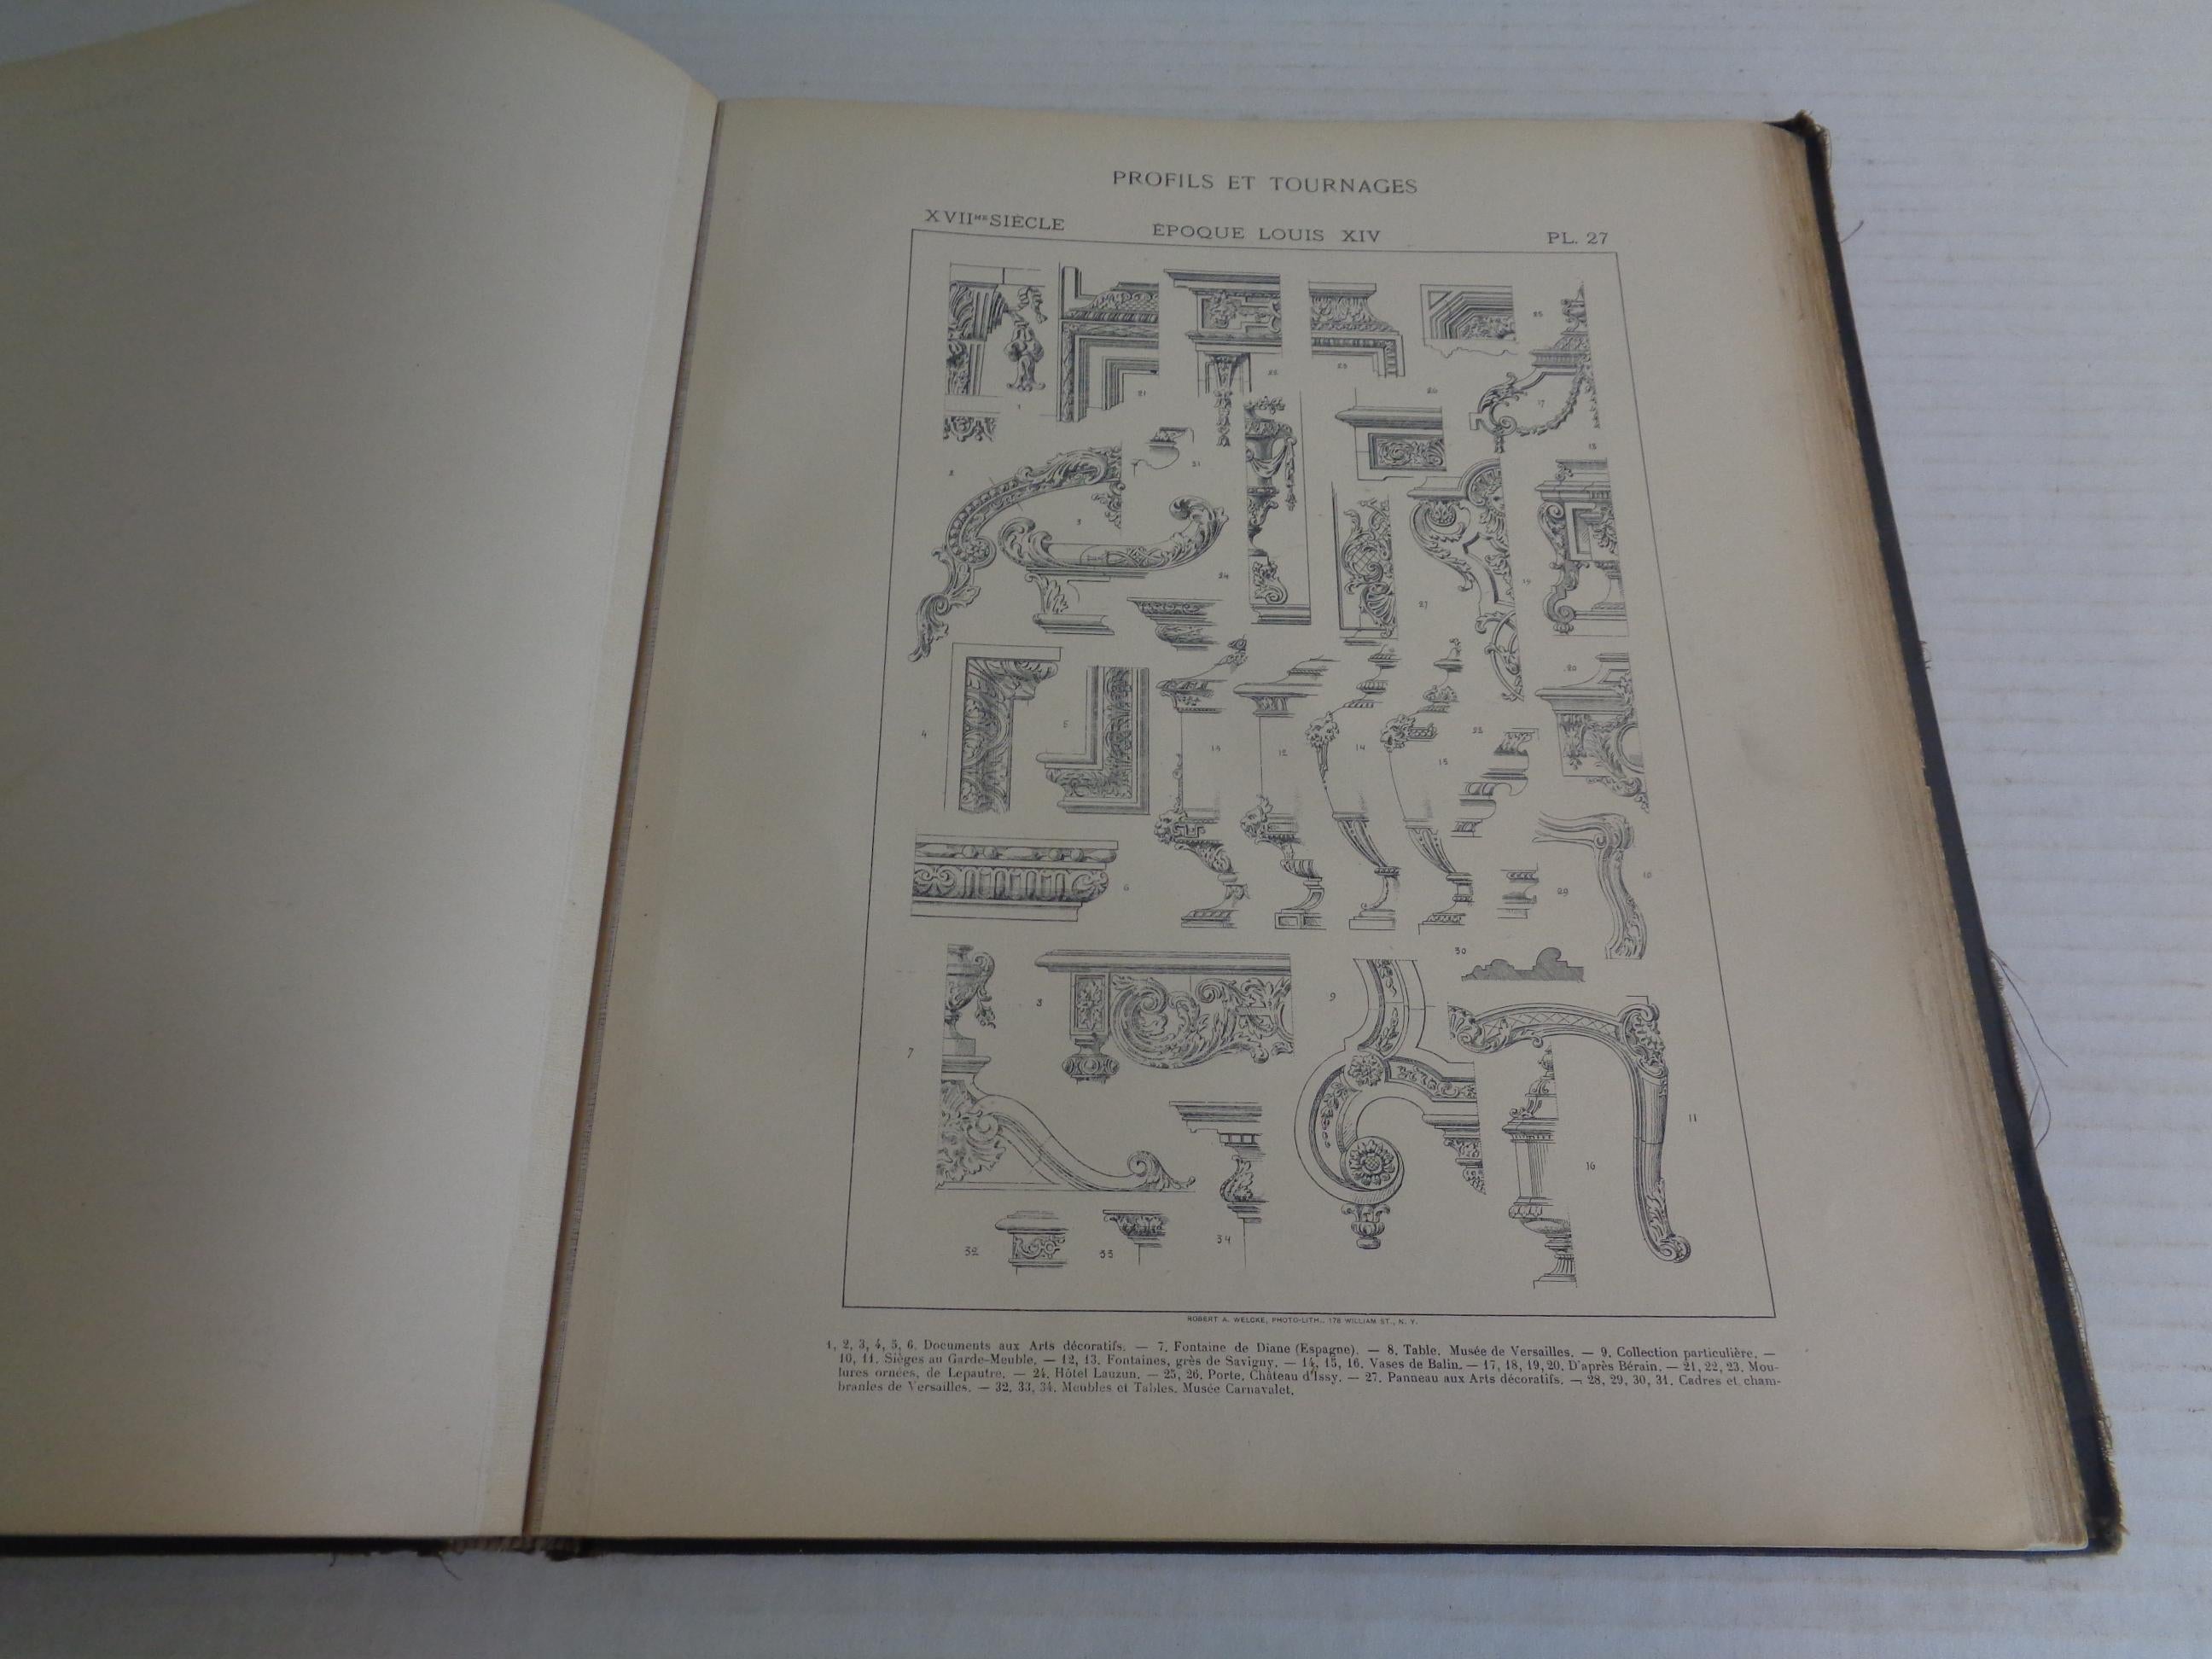  FRENCH STYLES: Furniture & Architecture - Bajot, Paris - 19th C. Folio Book For Sale 3